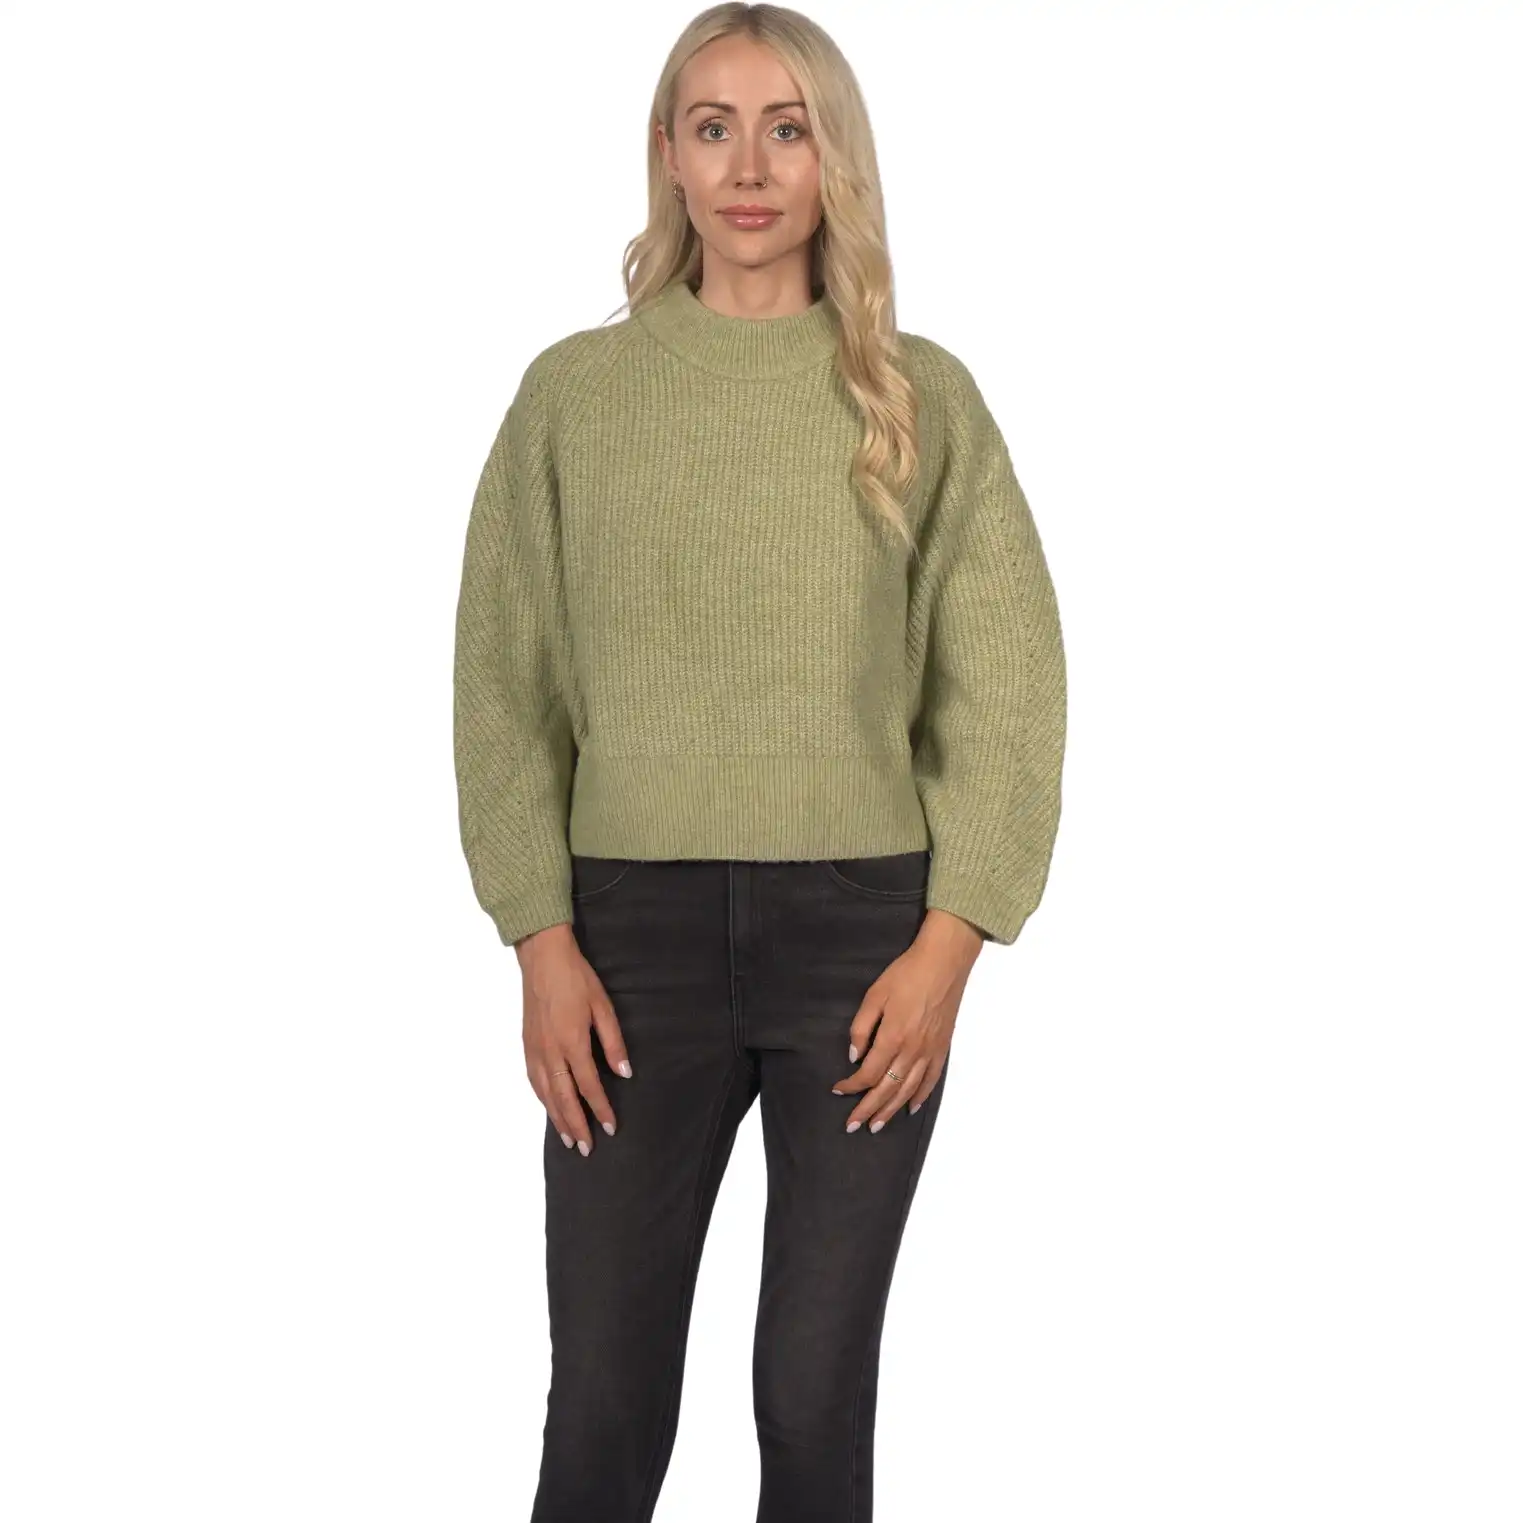 Topshop Women's Dolman Sleeve Knit Jumper  - Sage Green